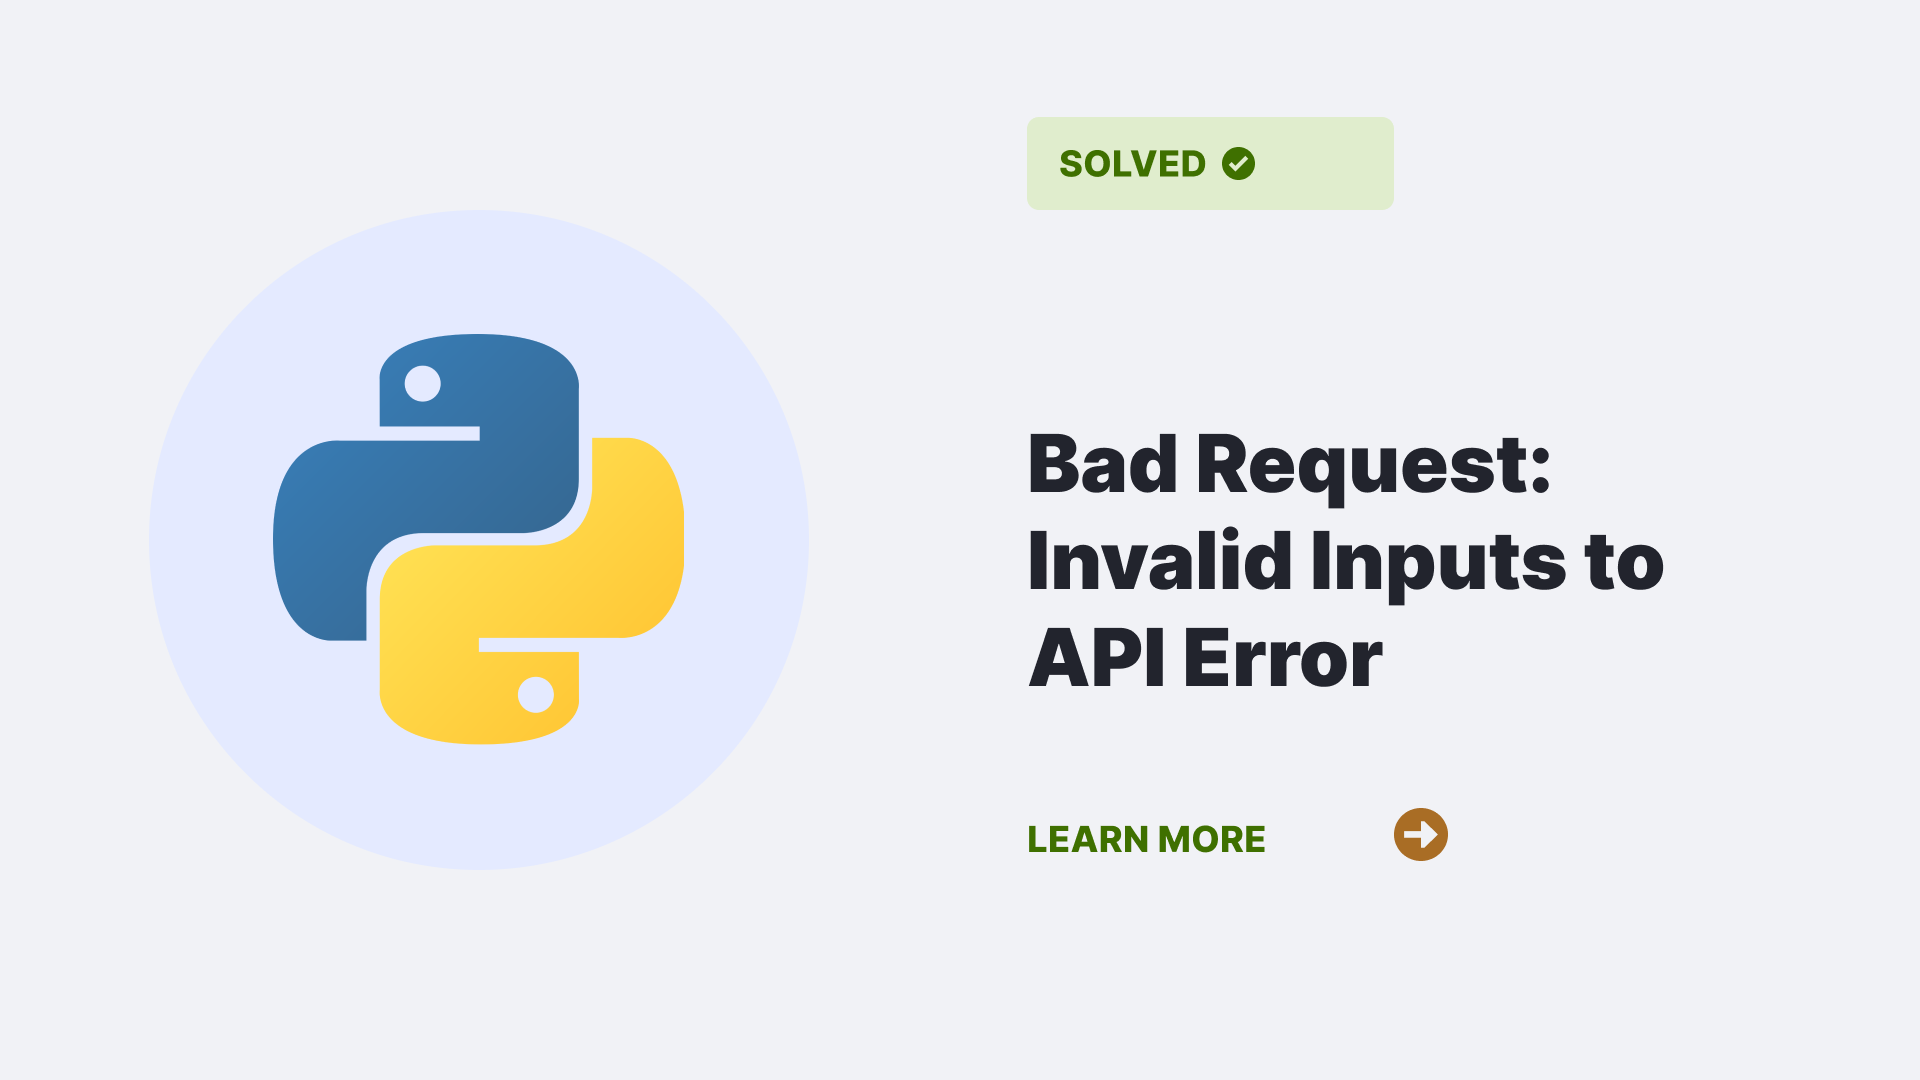 Bad Request: Invalid Inputs to API Error